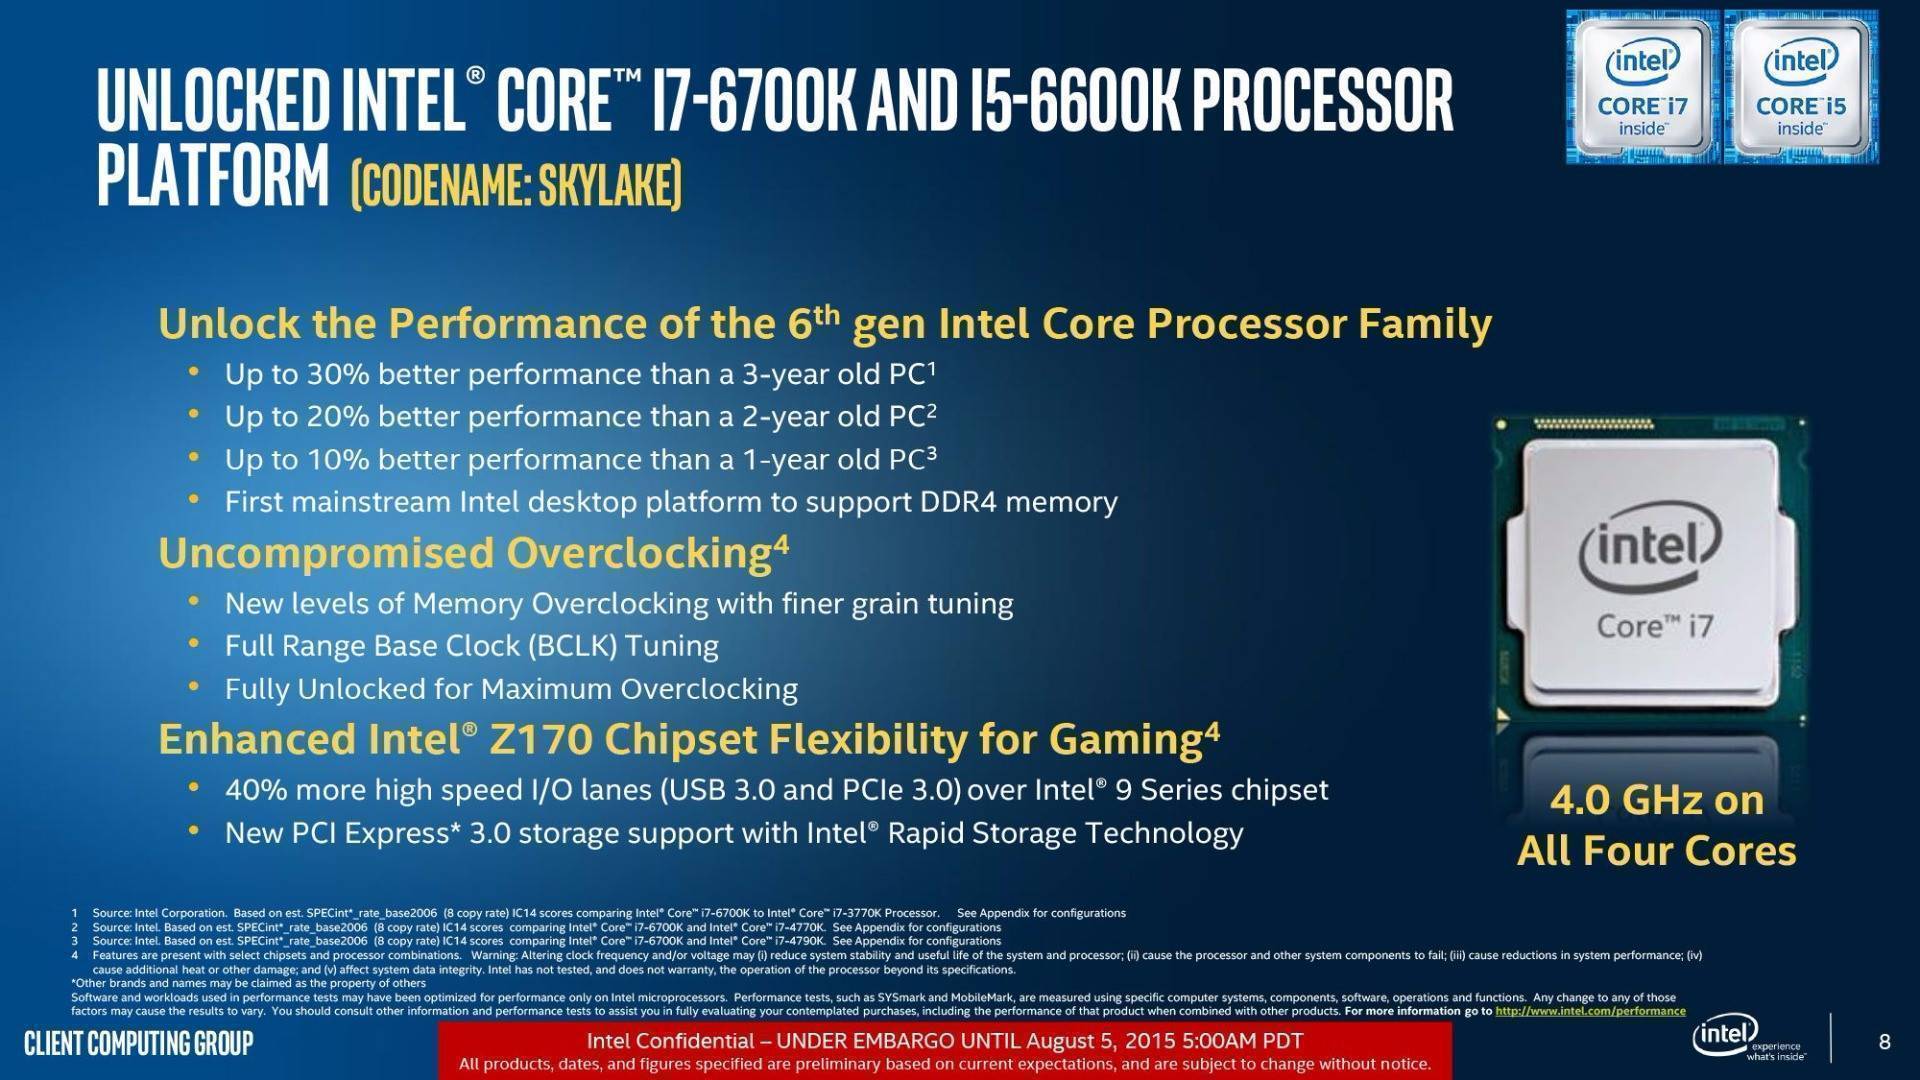 https://gocdkeys.com/images/captures/intel-core-i7-processor-1.jpg